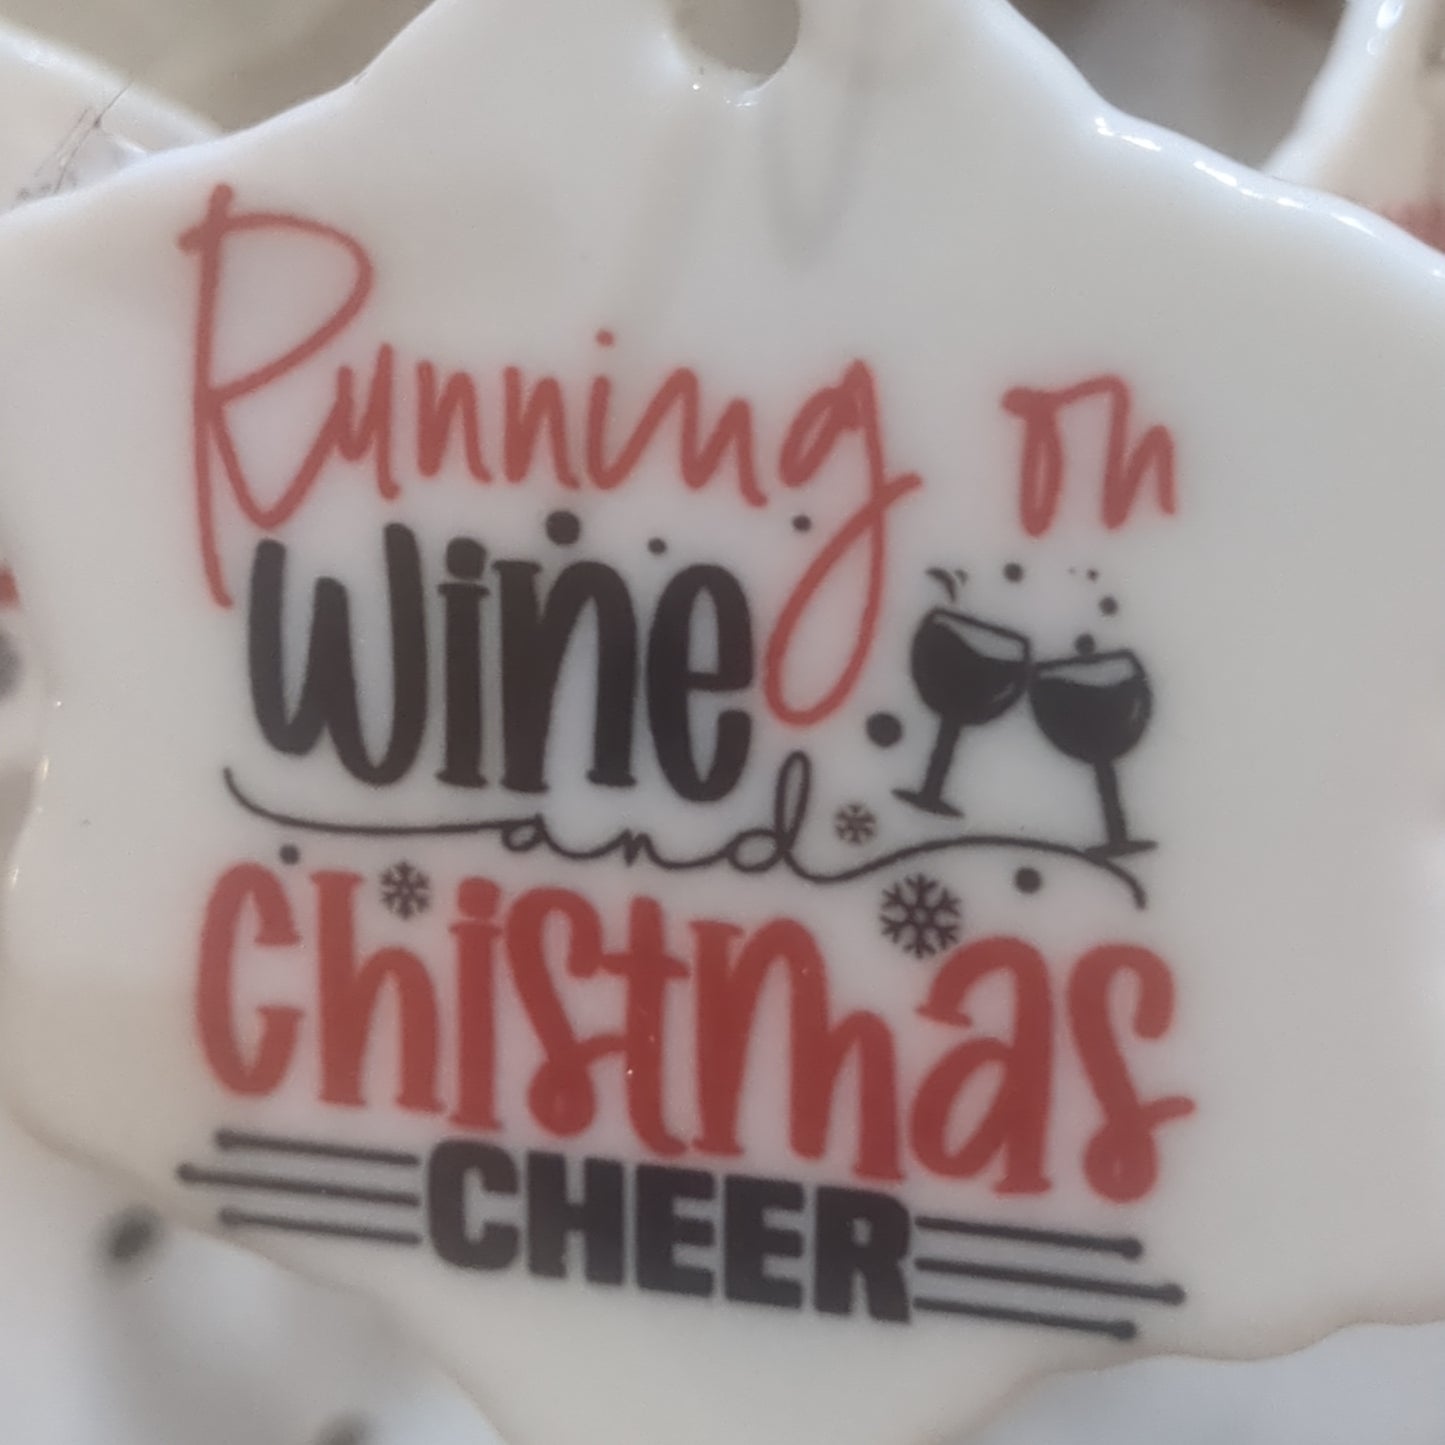 Ceramic wine ornament. Running on wine and Christmas cheer